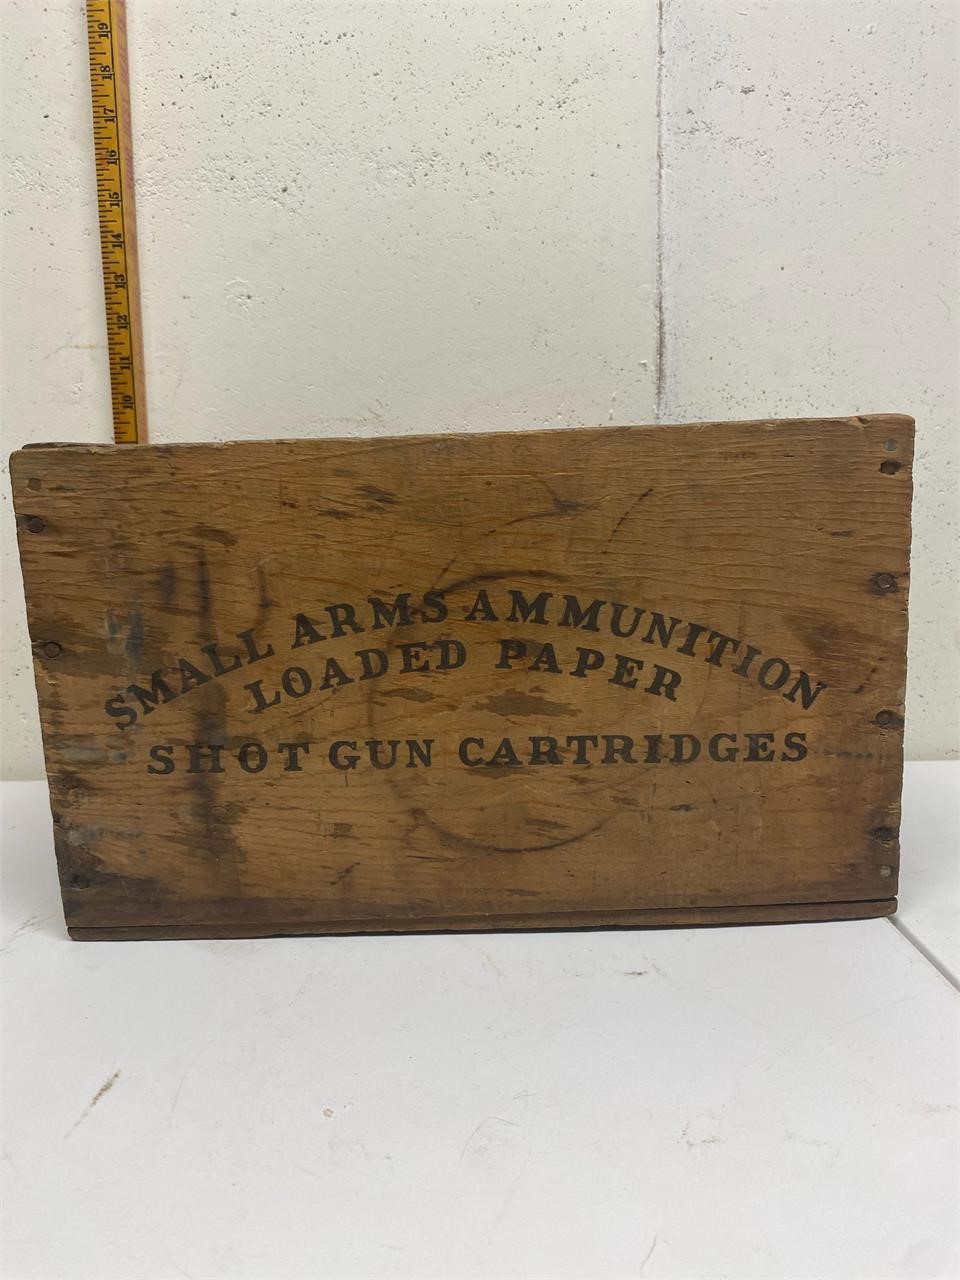 Shotgun cartridge box